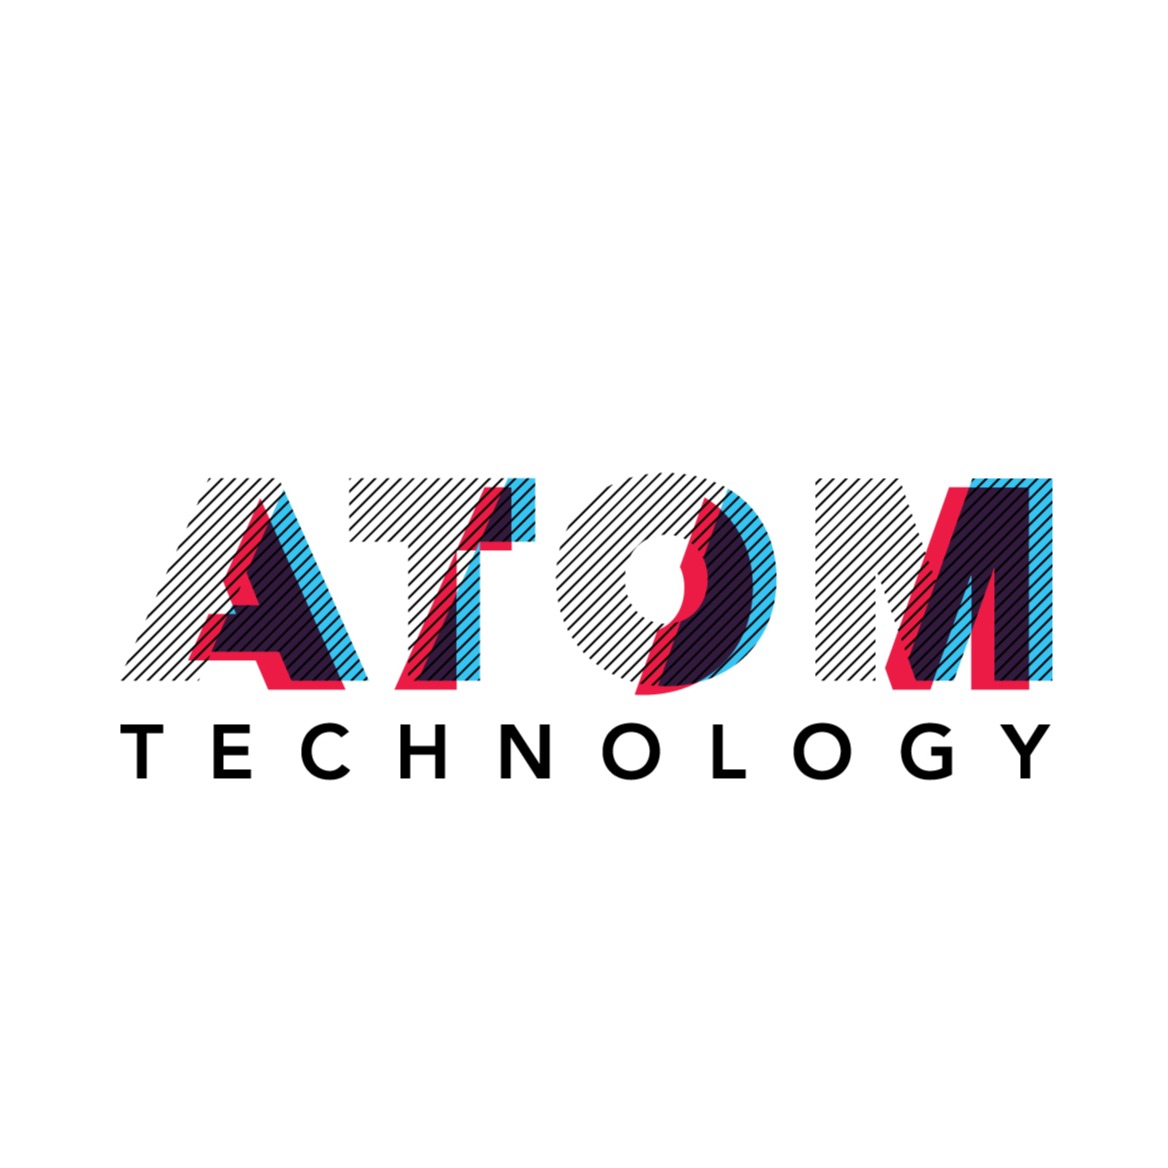 Atom Technology